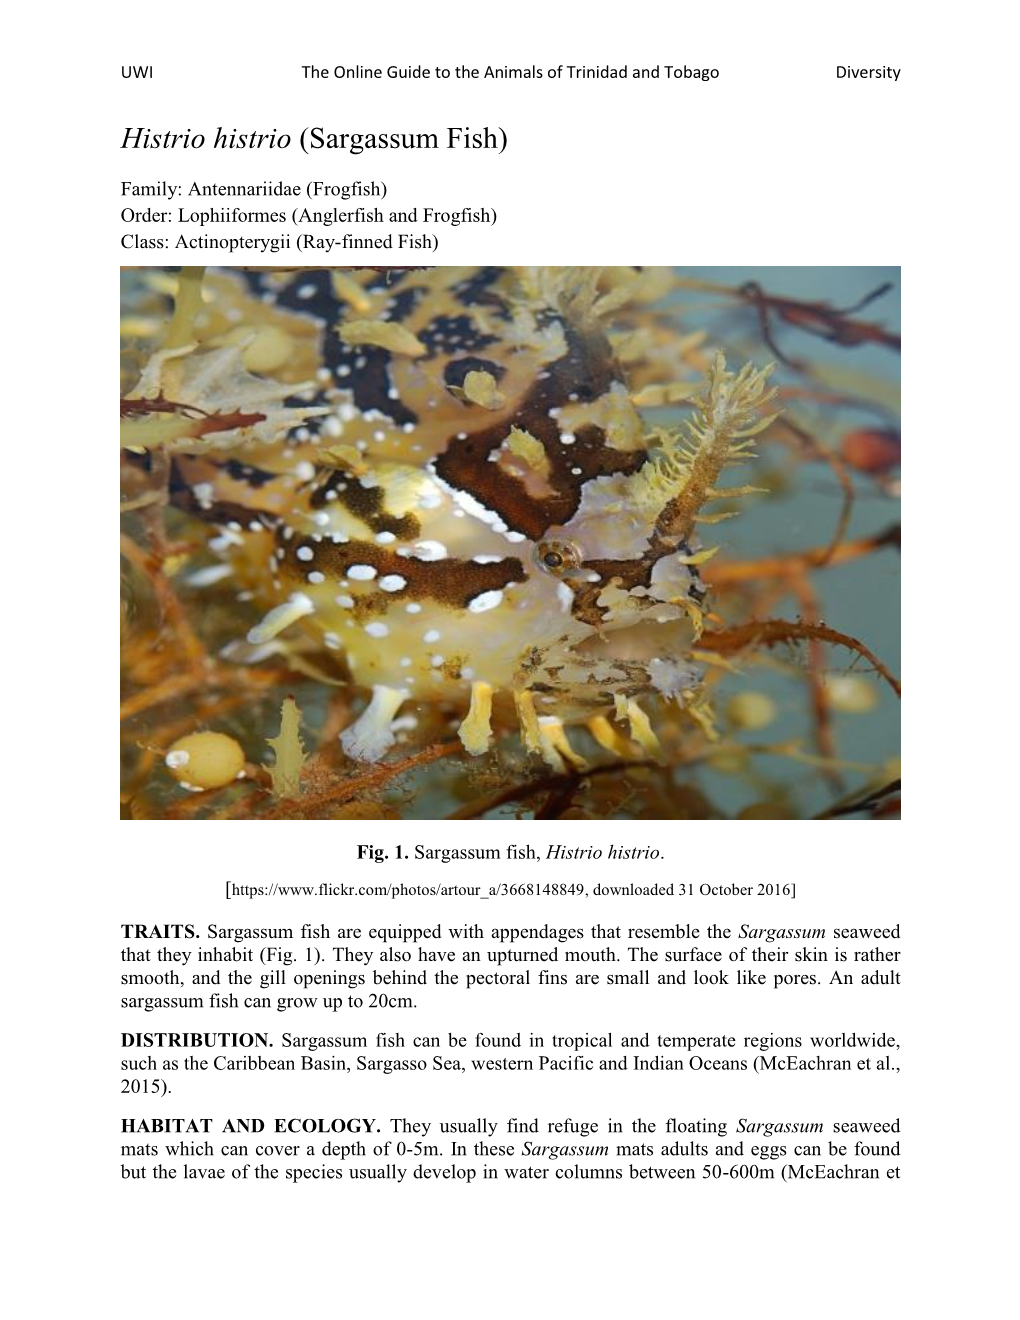 Histrio Histrio (Sargassum Fish)